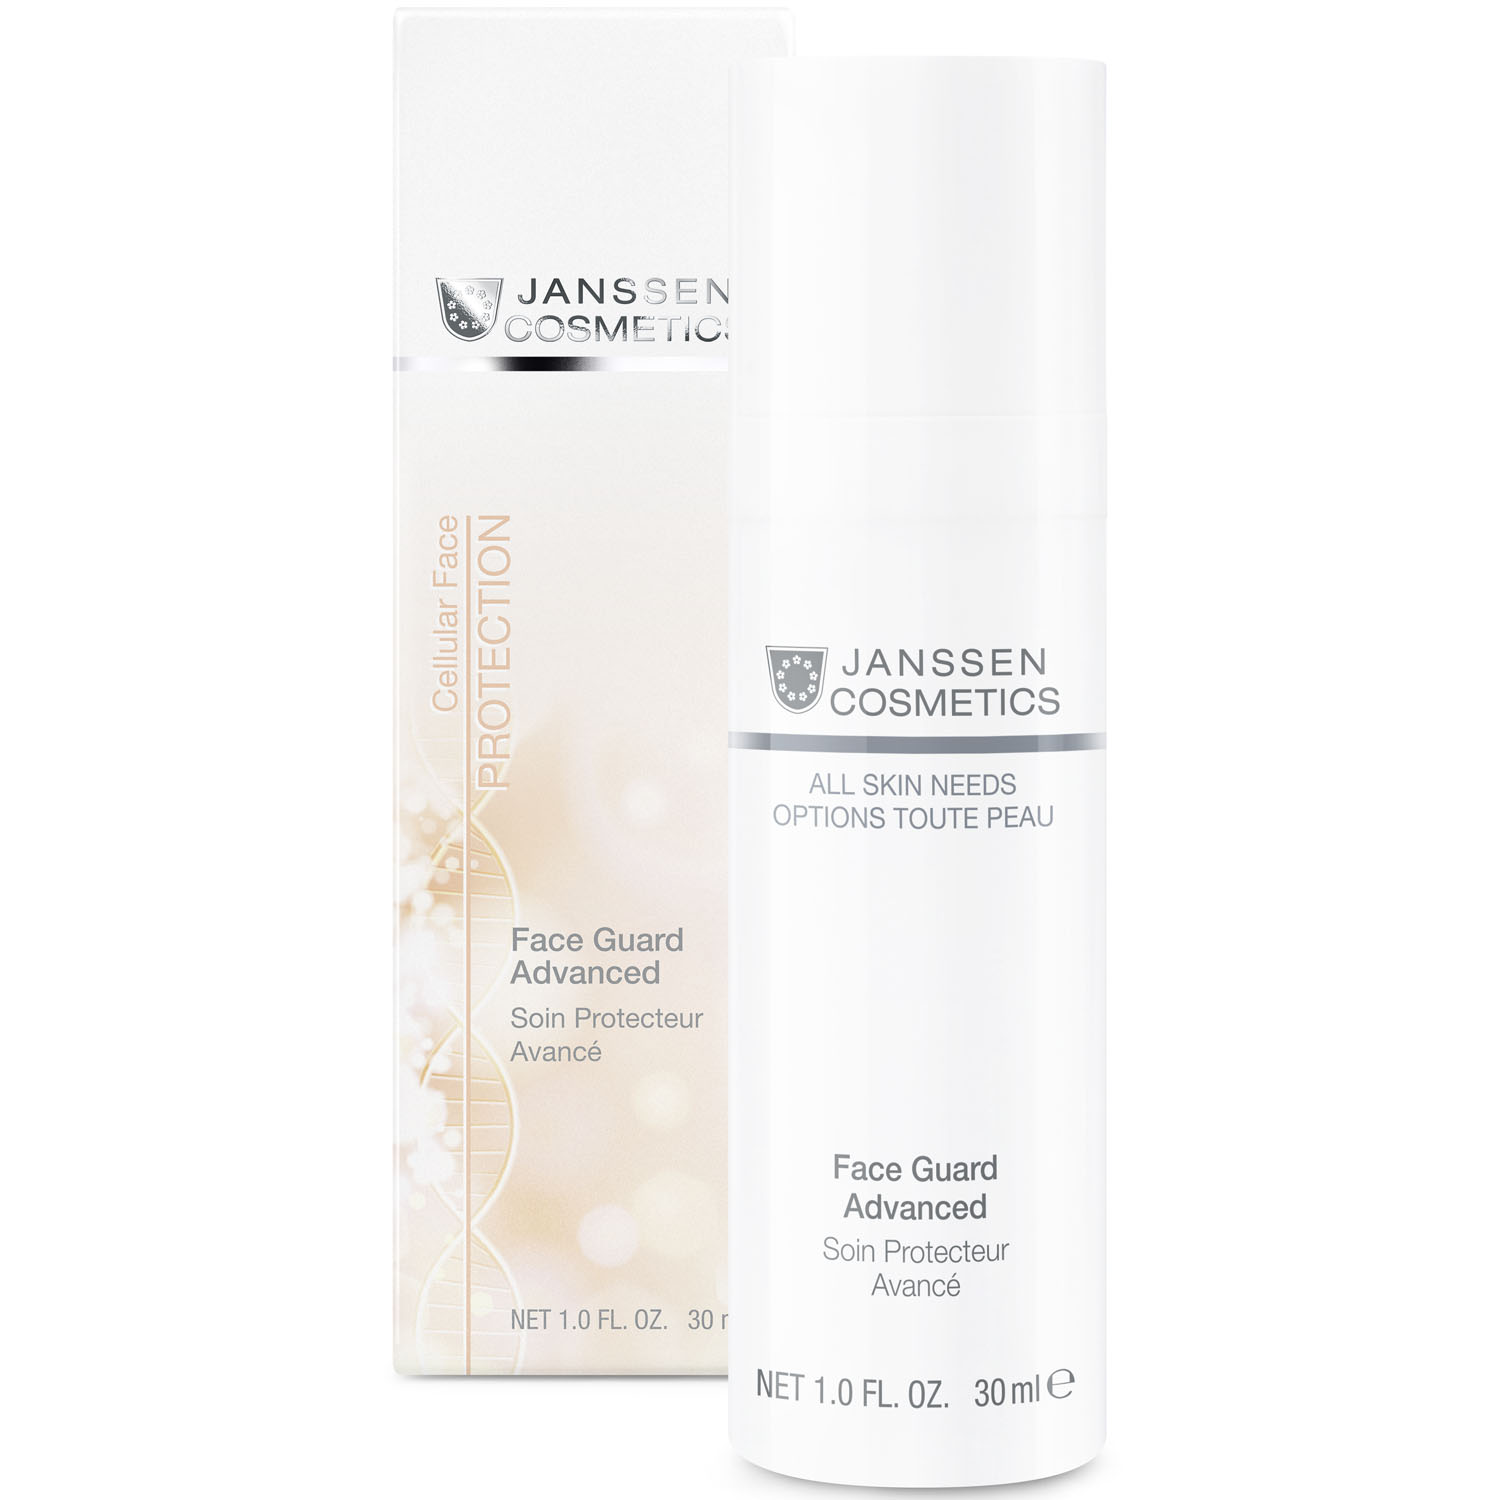 Janssen Cosmetics Легкая солнцезащитная основа SPF 30 с UVA-, UVB- и IR-защитой Face Guard Advanced, 30 мл (Janssen Cosmetics, All skin needs)